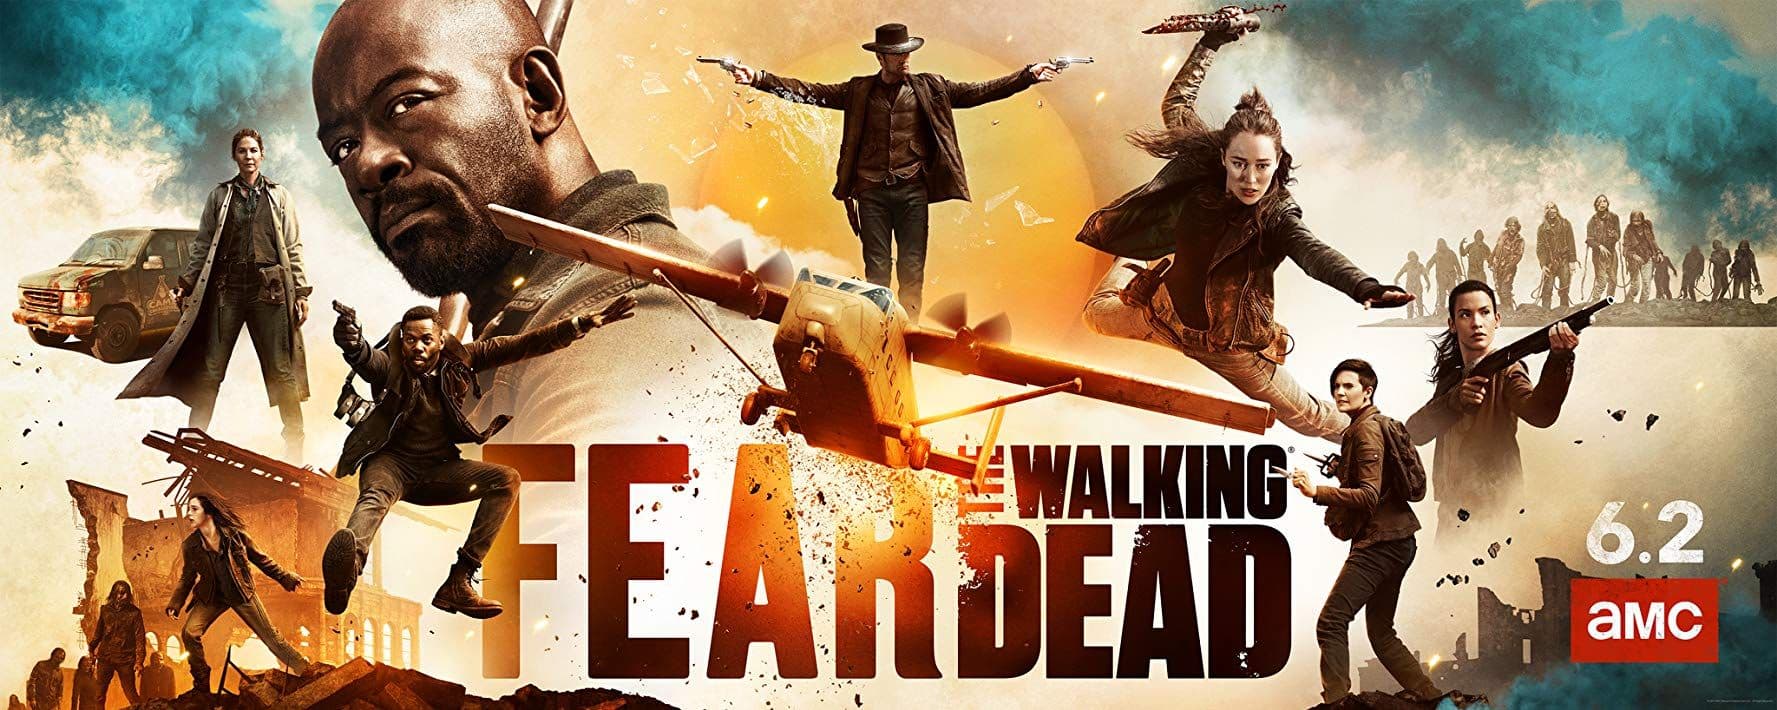 Fear The Walking Dead Amc Season 5 Discussion Thread 6 2 19 Dvd Talk Forum